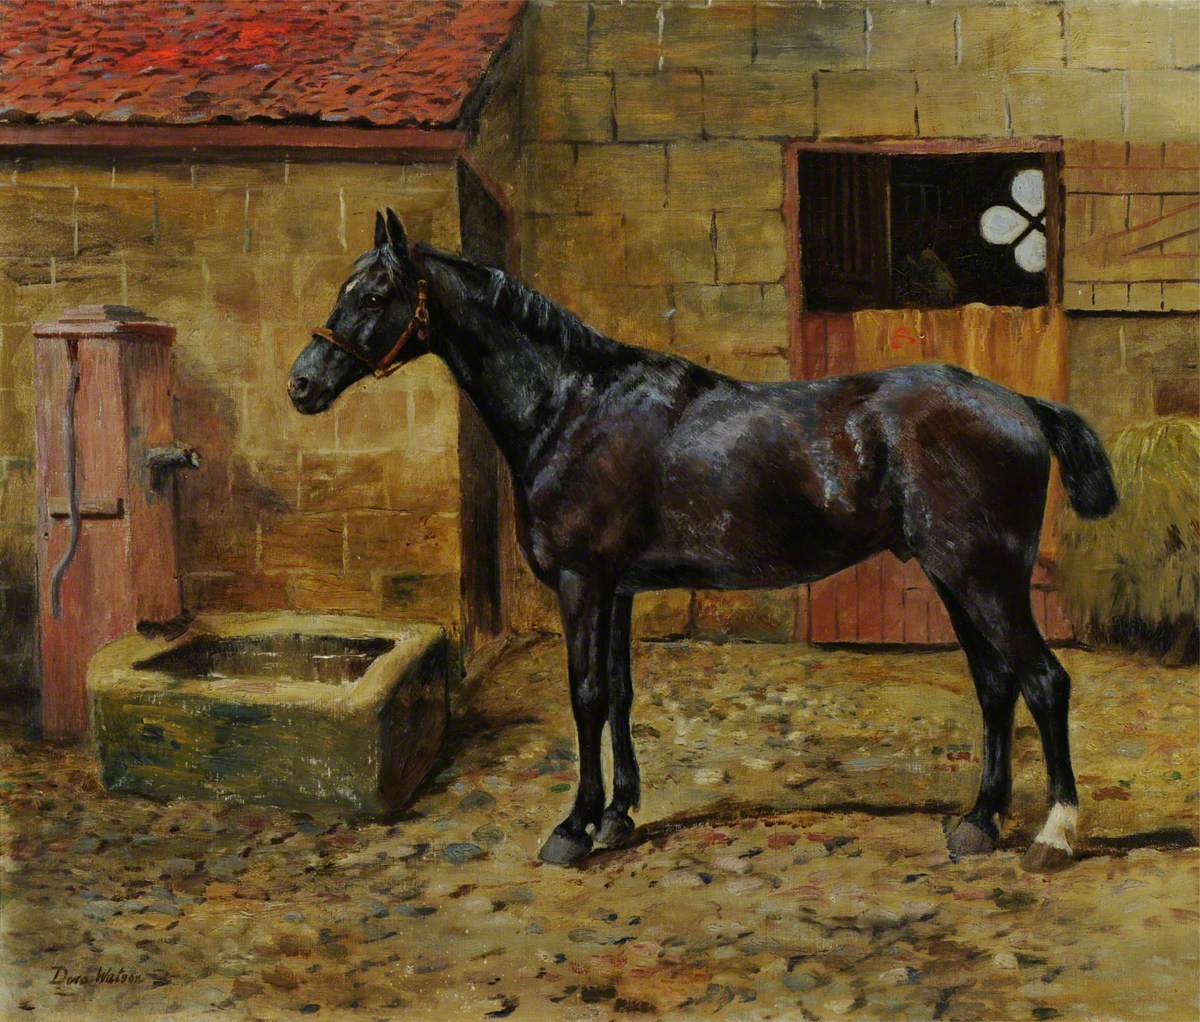 A Black Horse in a Courtyard